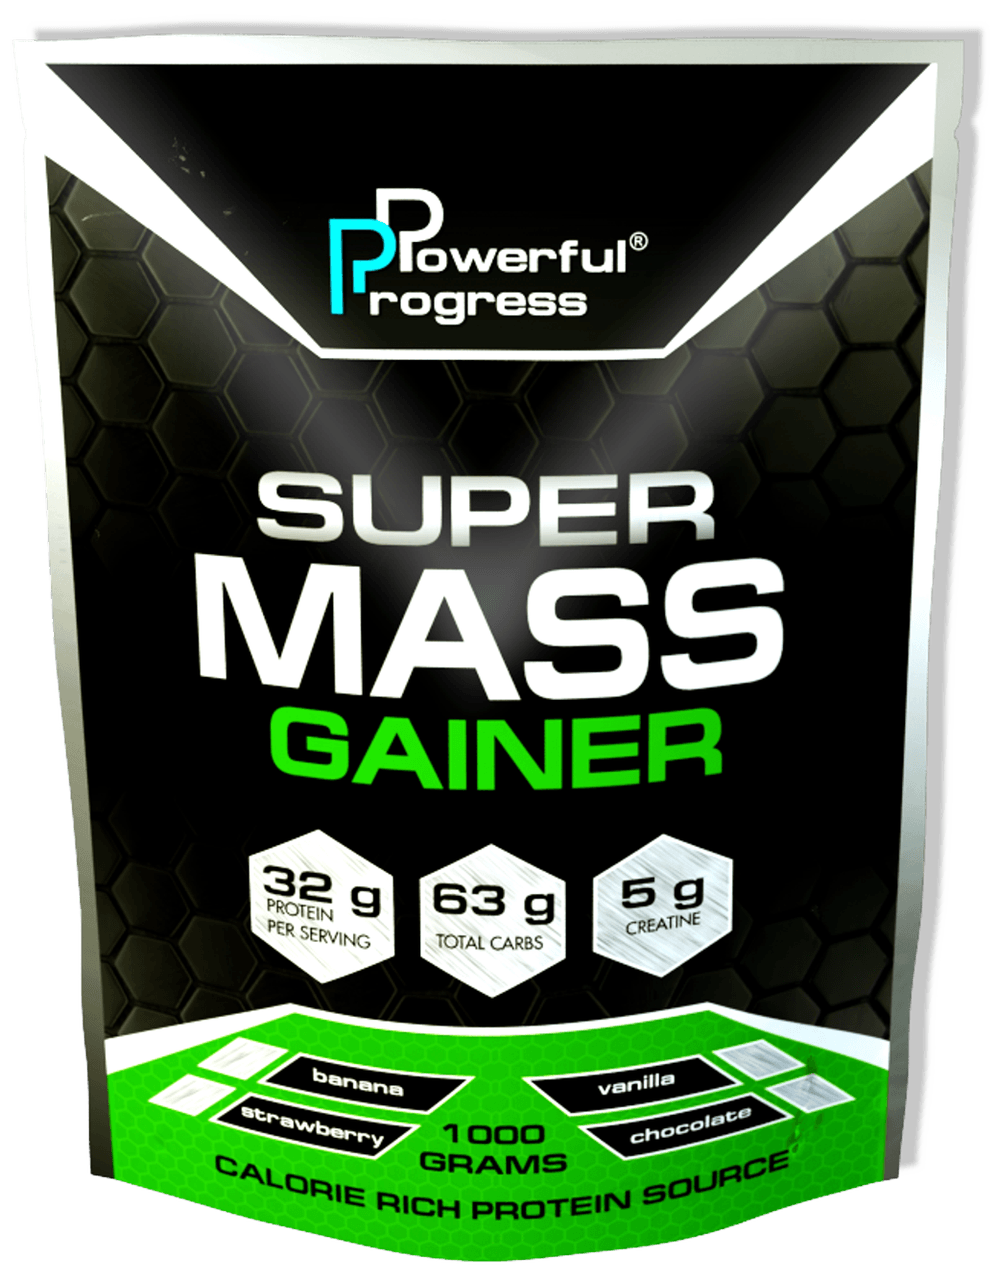 Super Mass Gainer, 1000 g, Powerful Progress. Gainer. Mass Gain Energy & Endurance स्वास्थ्य लाभ 